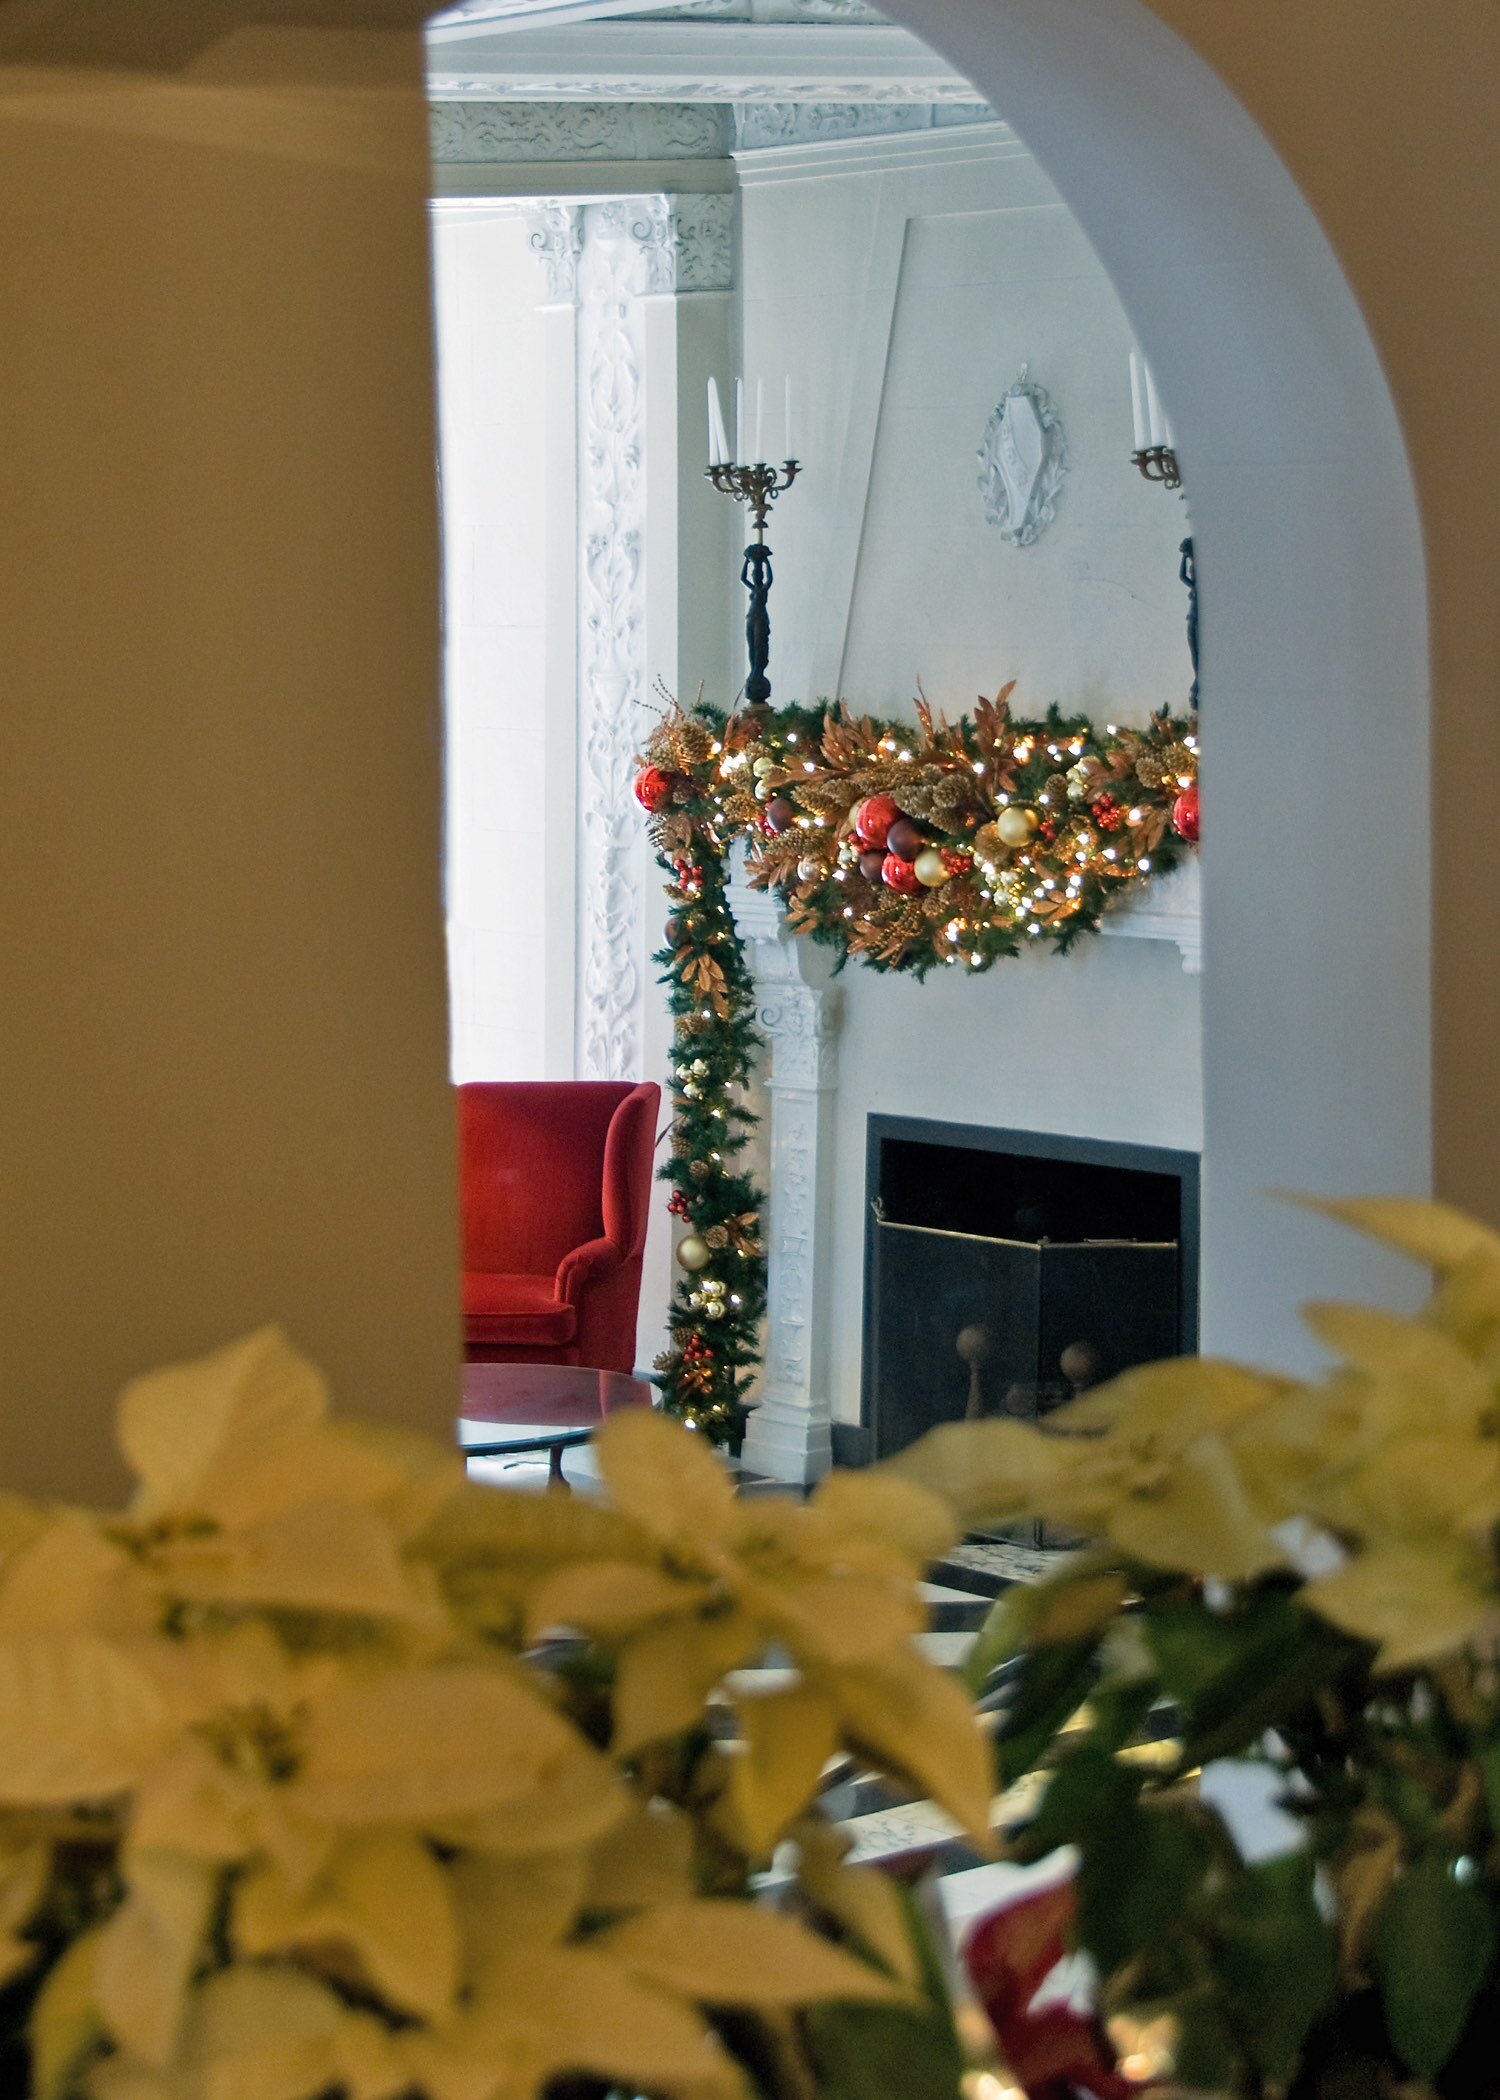 Vranicar 1-3-2015-Lobby, fireplace view, holiday decorations.jpg